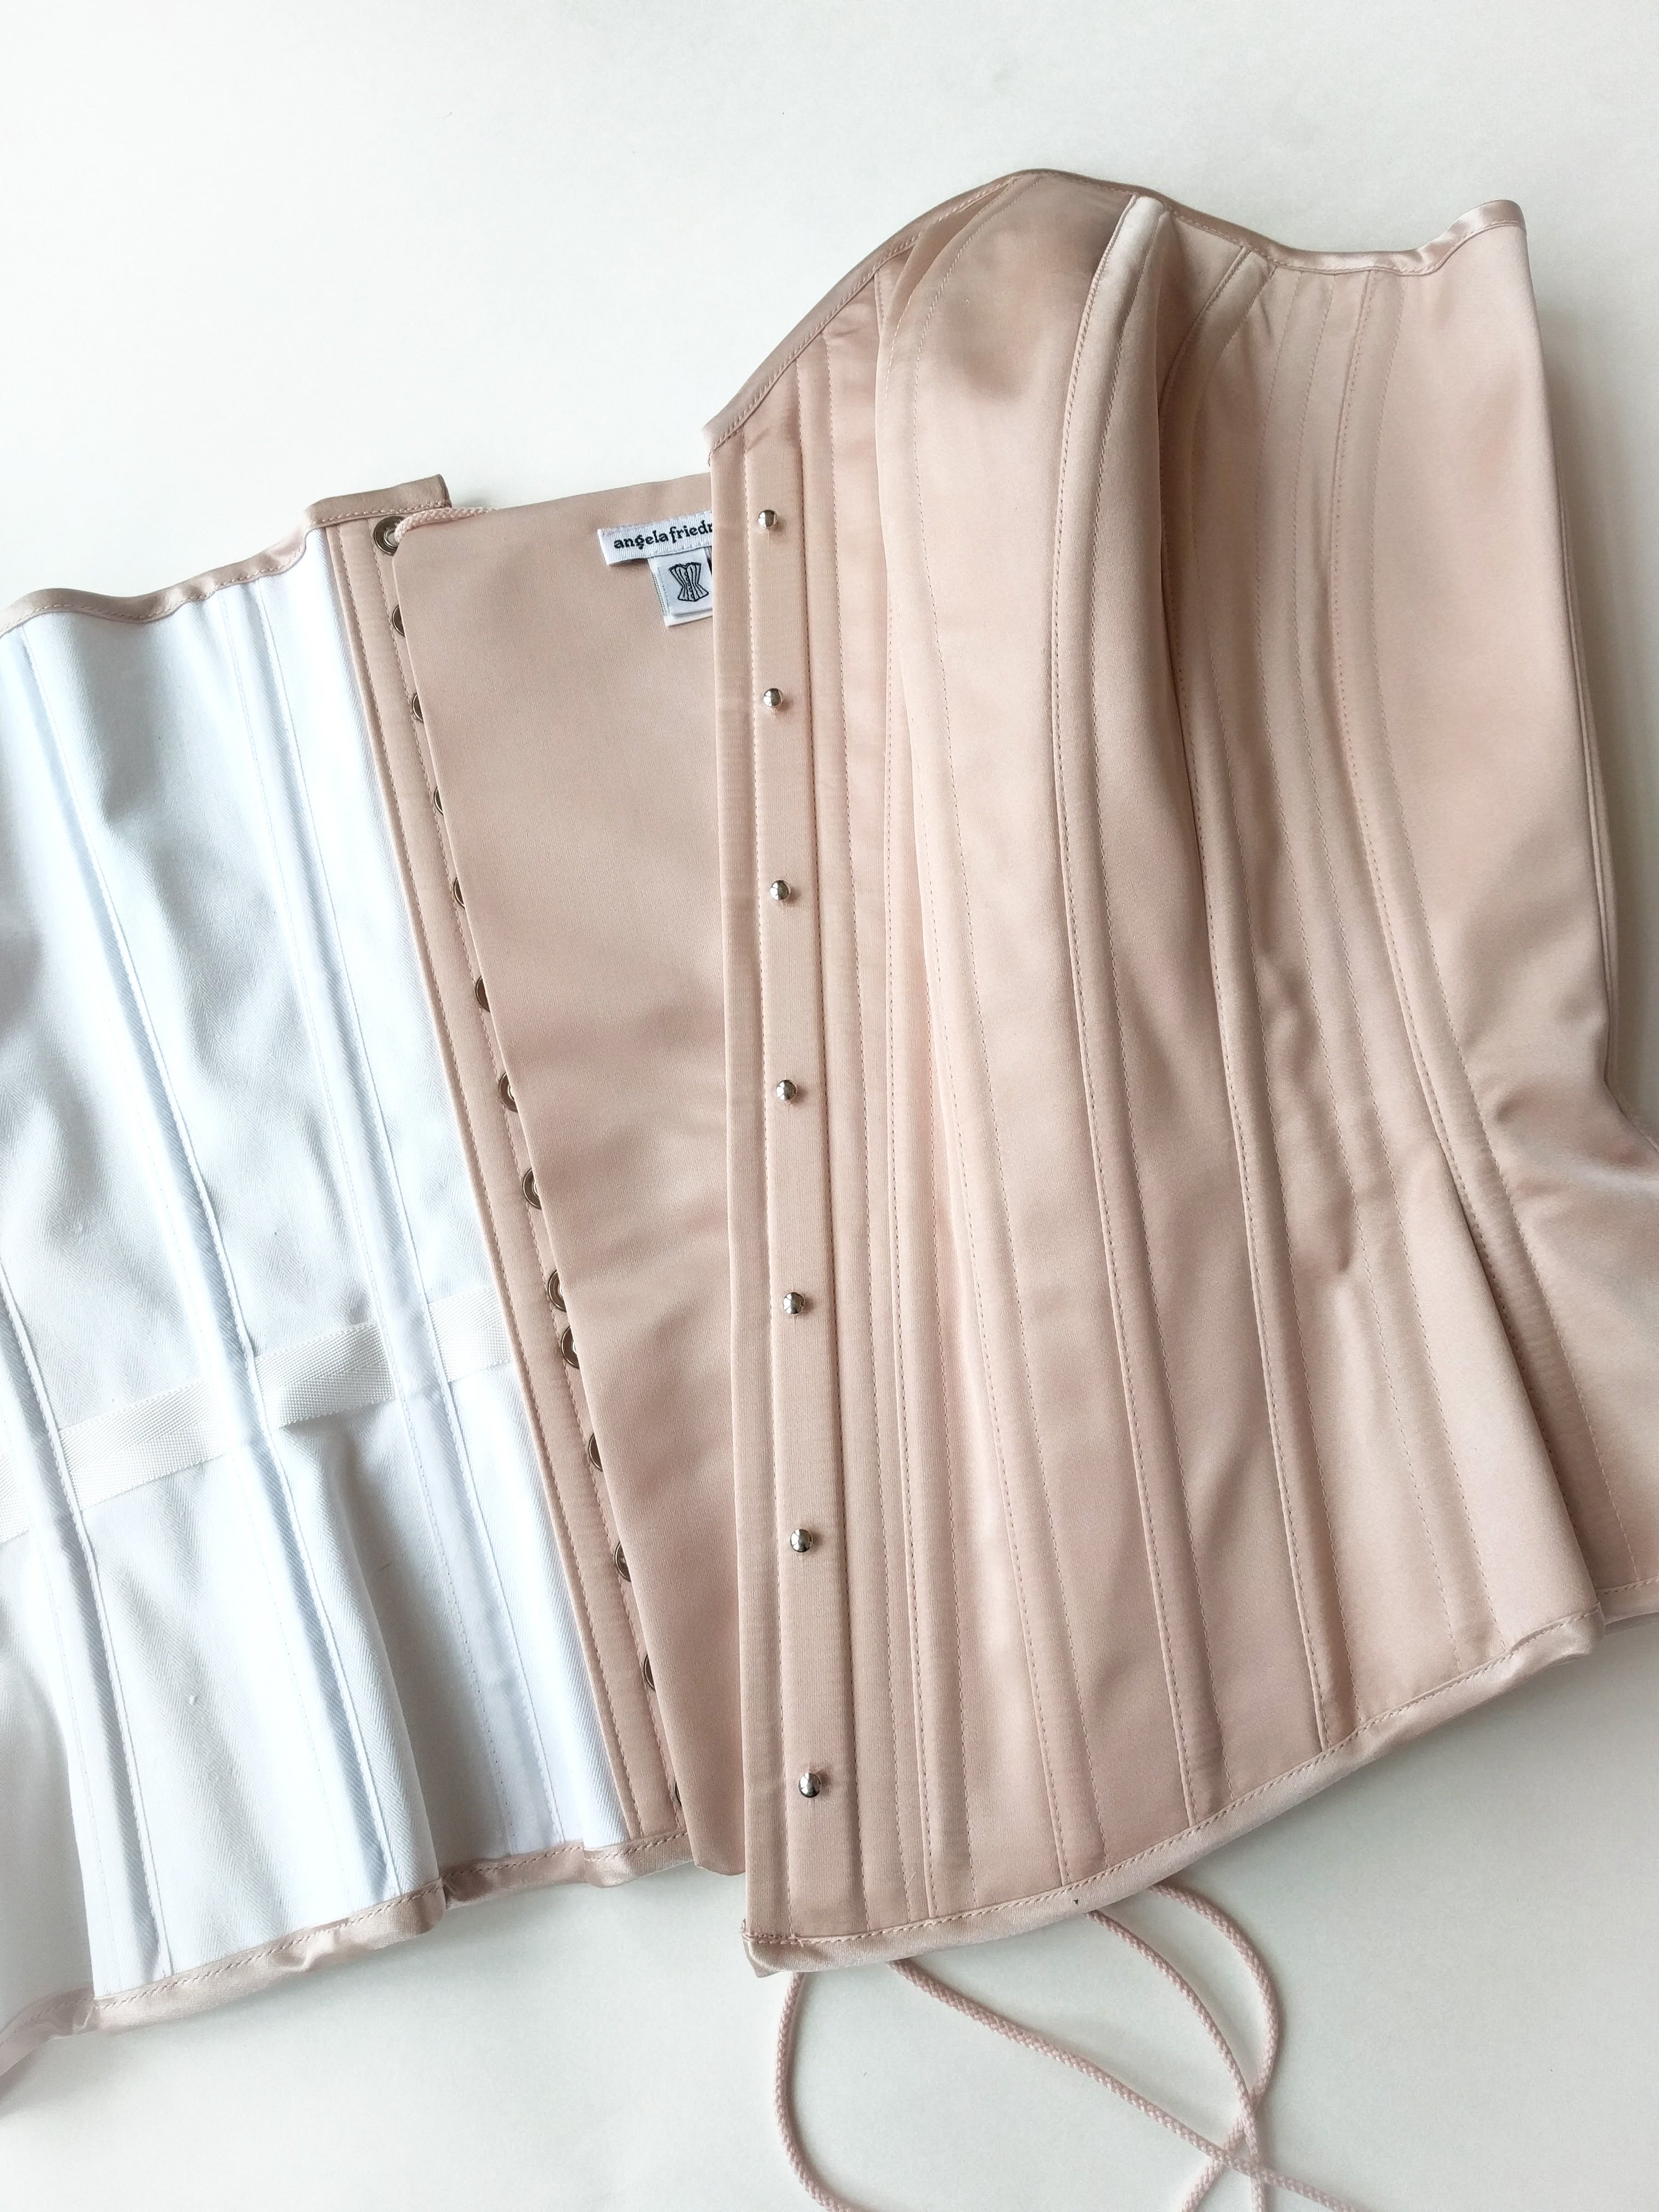 Pink corsets in 100% silk satin by vintage style corset designer Angela Friedman